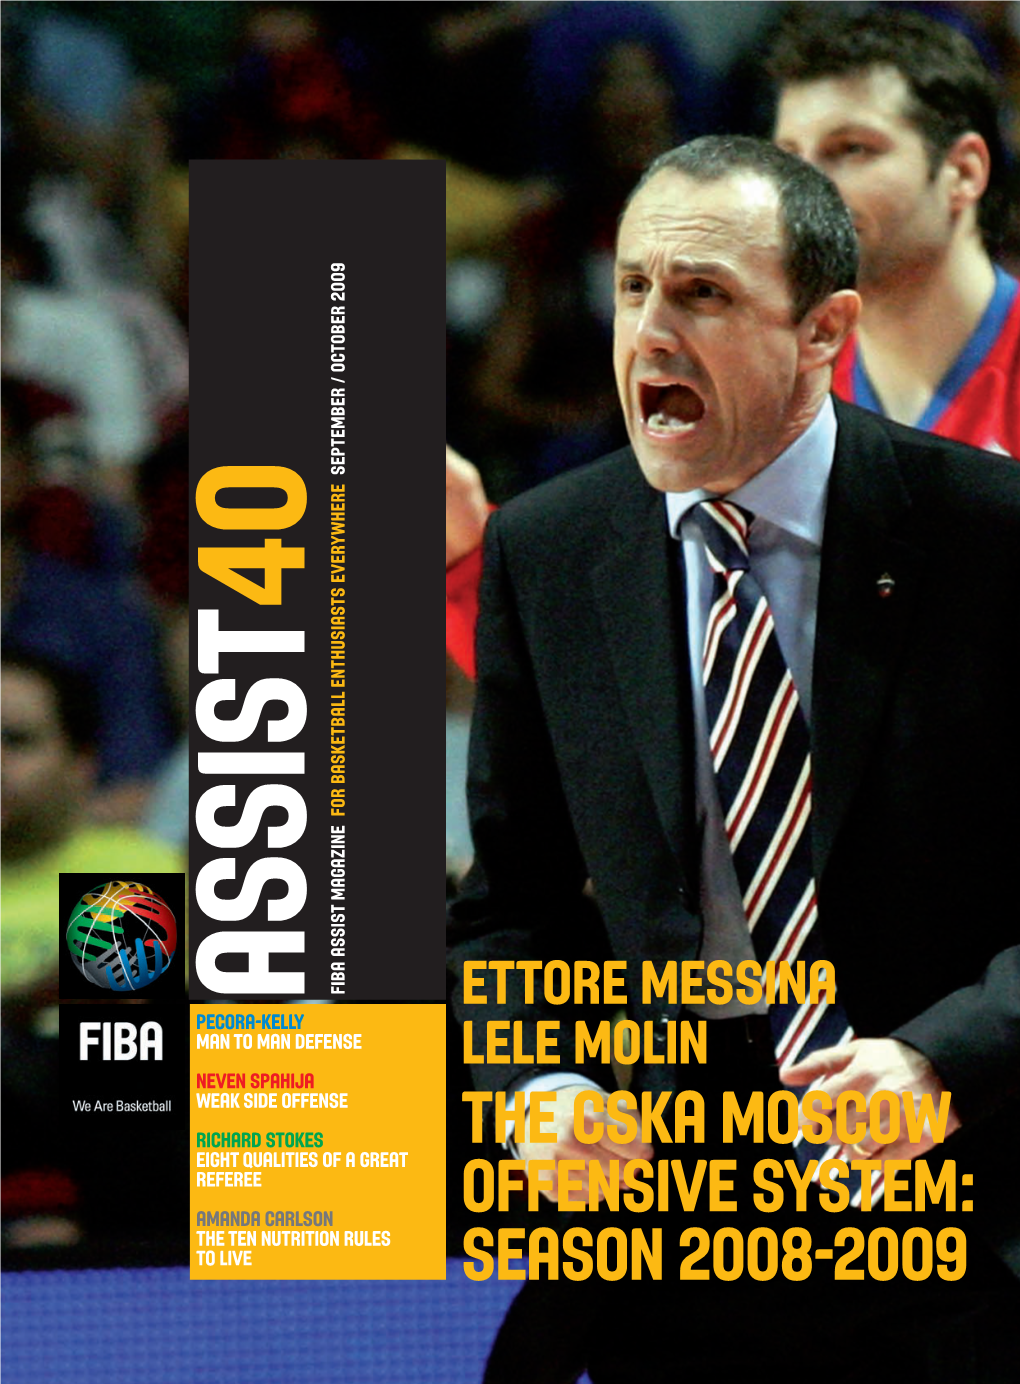 The CSKA Moscow Offensive System: Season 2008-2009